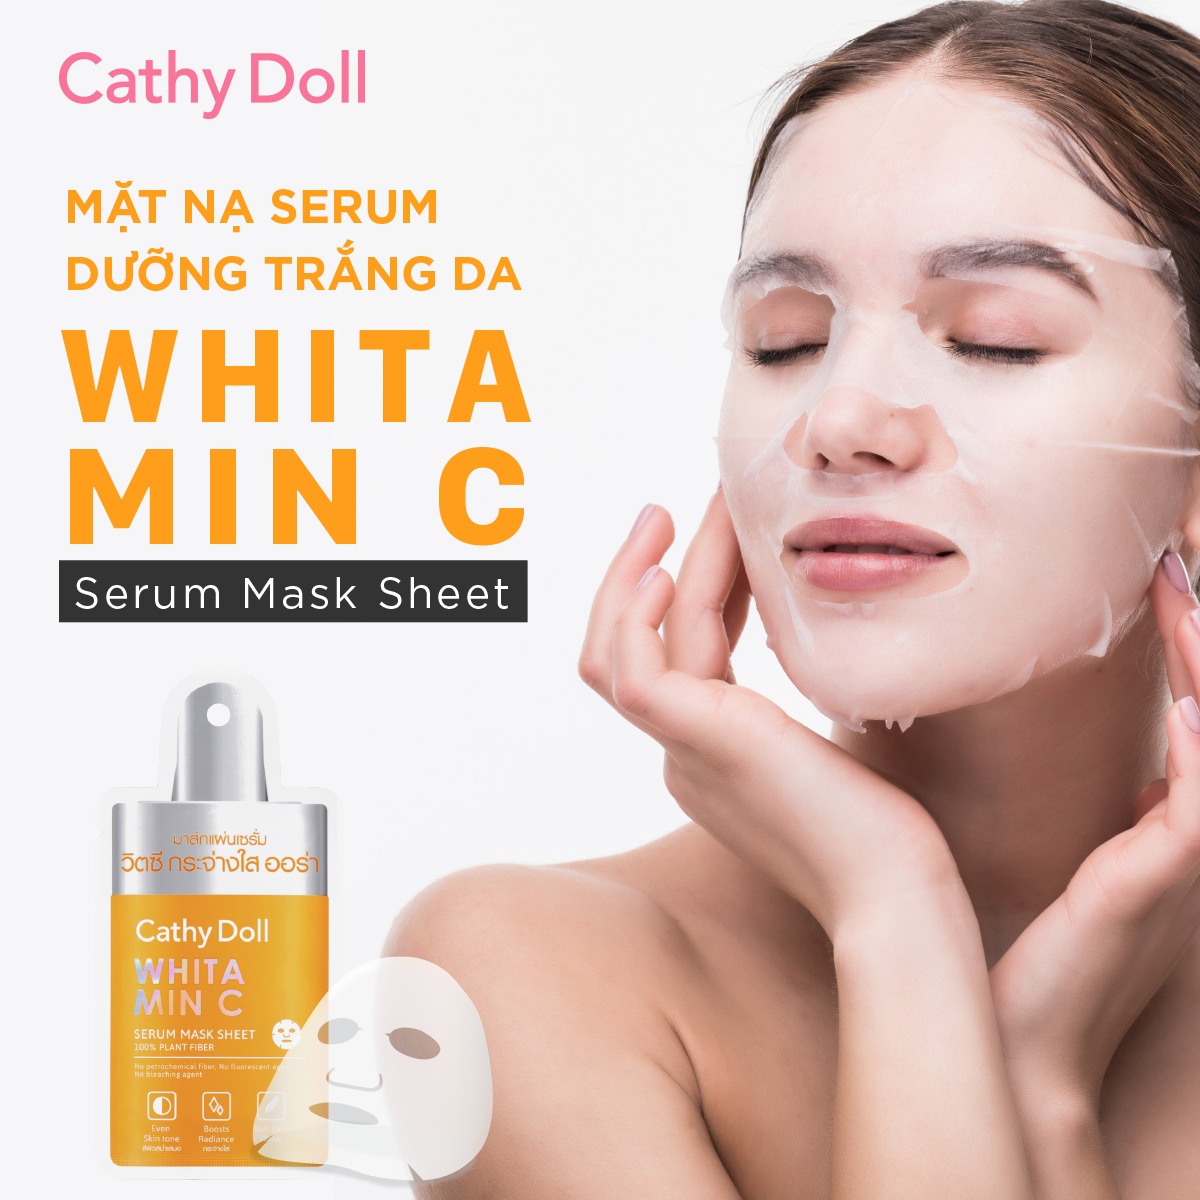 Mặt Nạ Cathy Doll Whitamin C Serum Mask Sheet 20g 